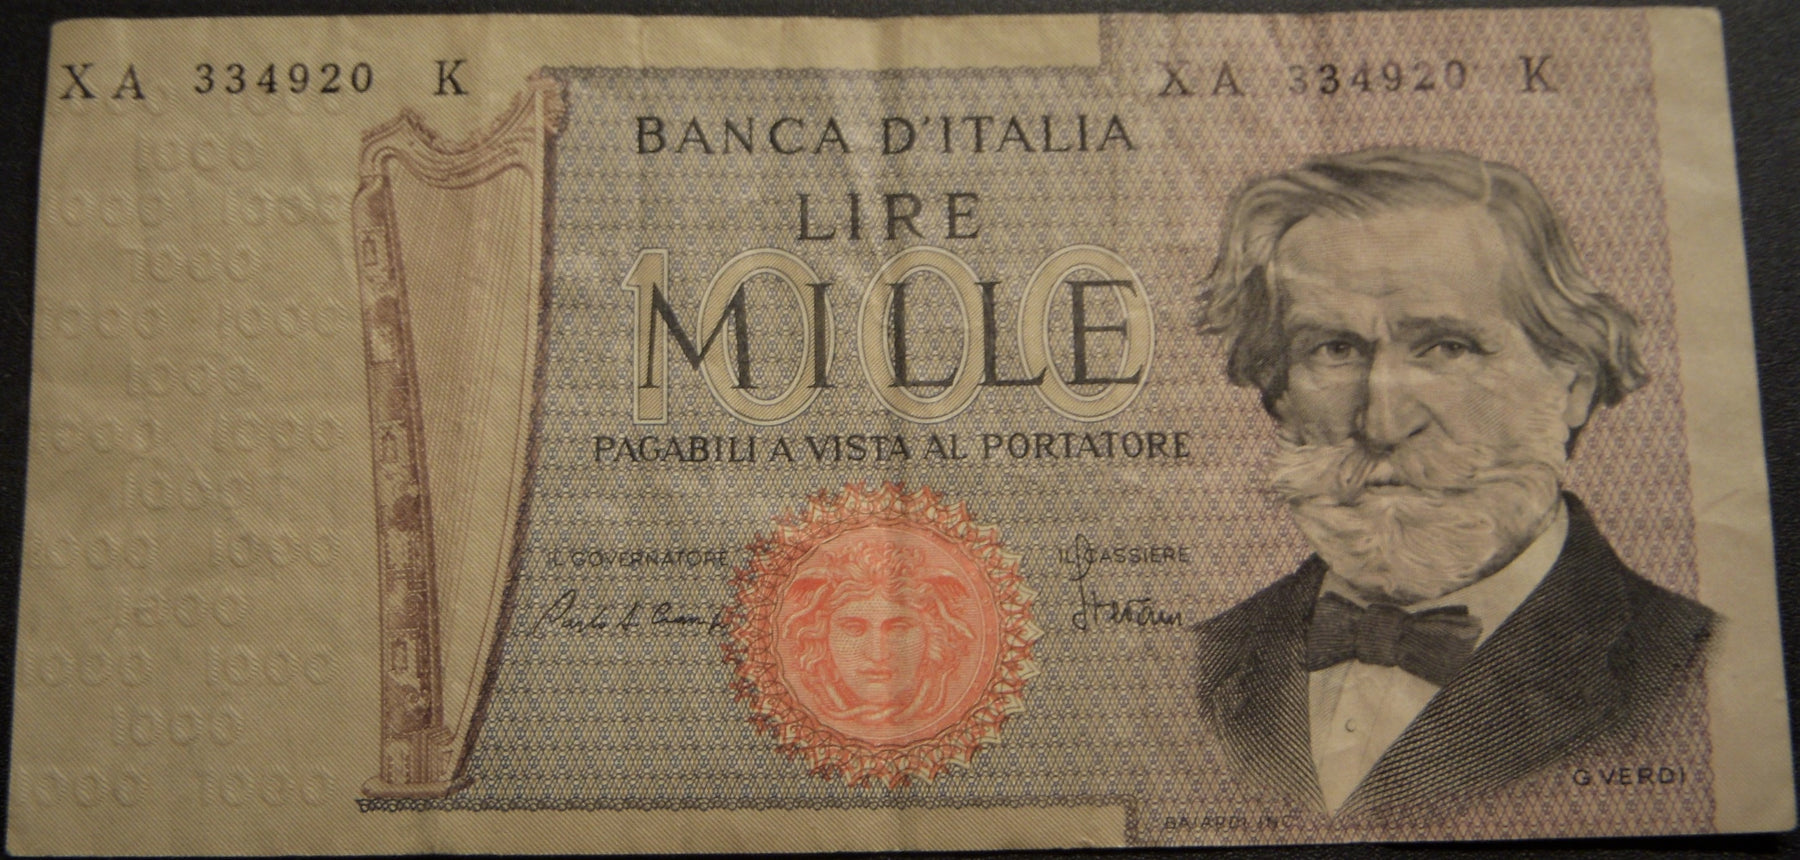 1980 1000 Lire Note - Italy